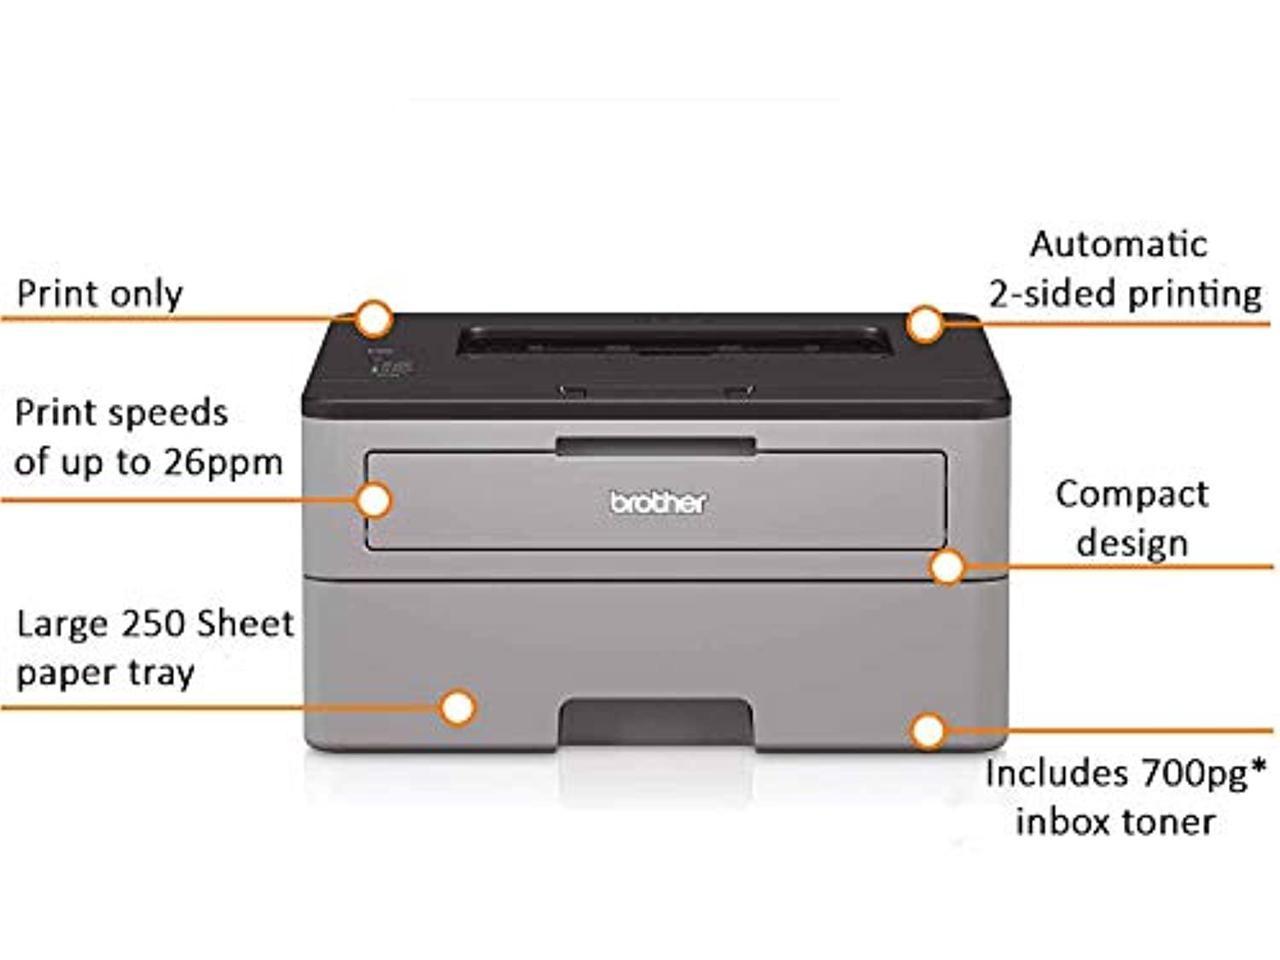 Brother HL-L2300D Monochrome Laser Printer with Duplex Printing (HLL2300D)